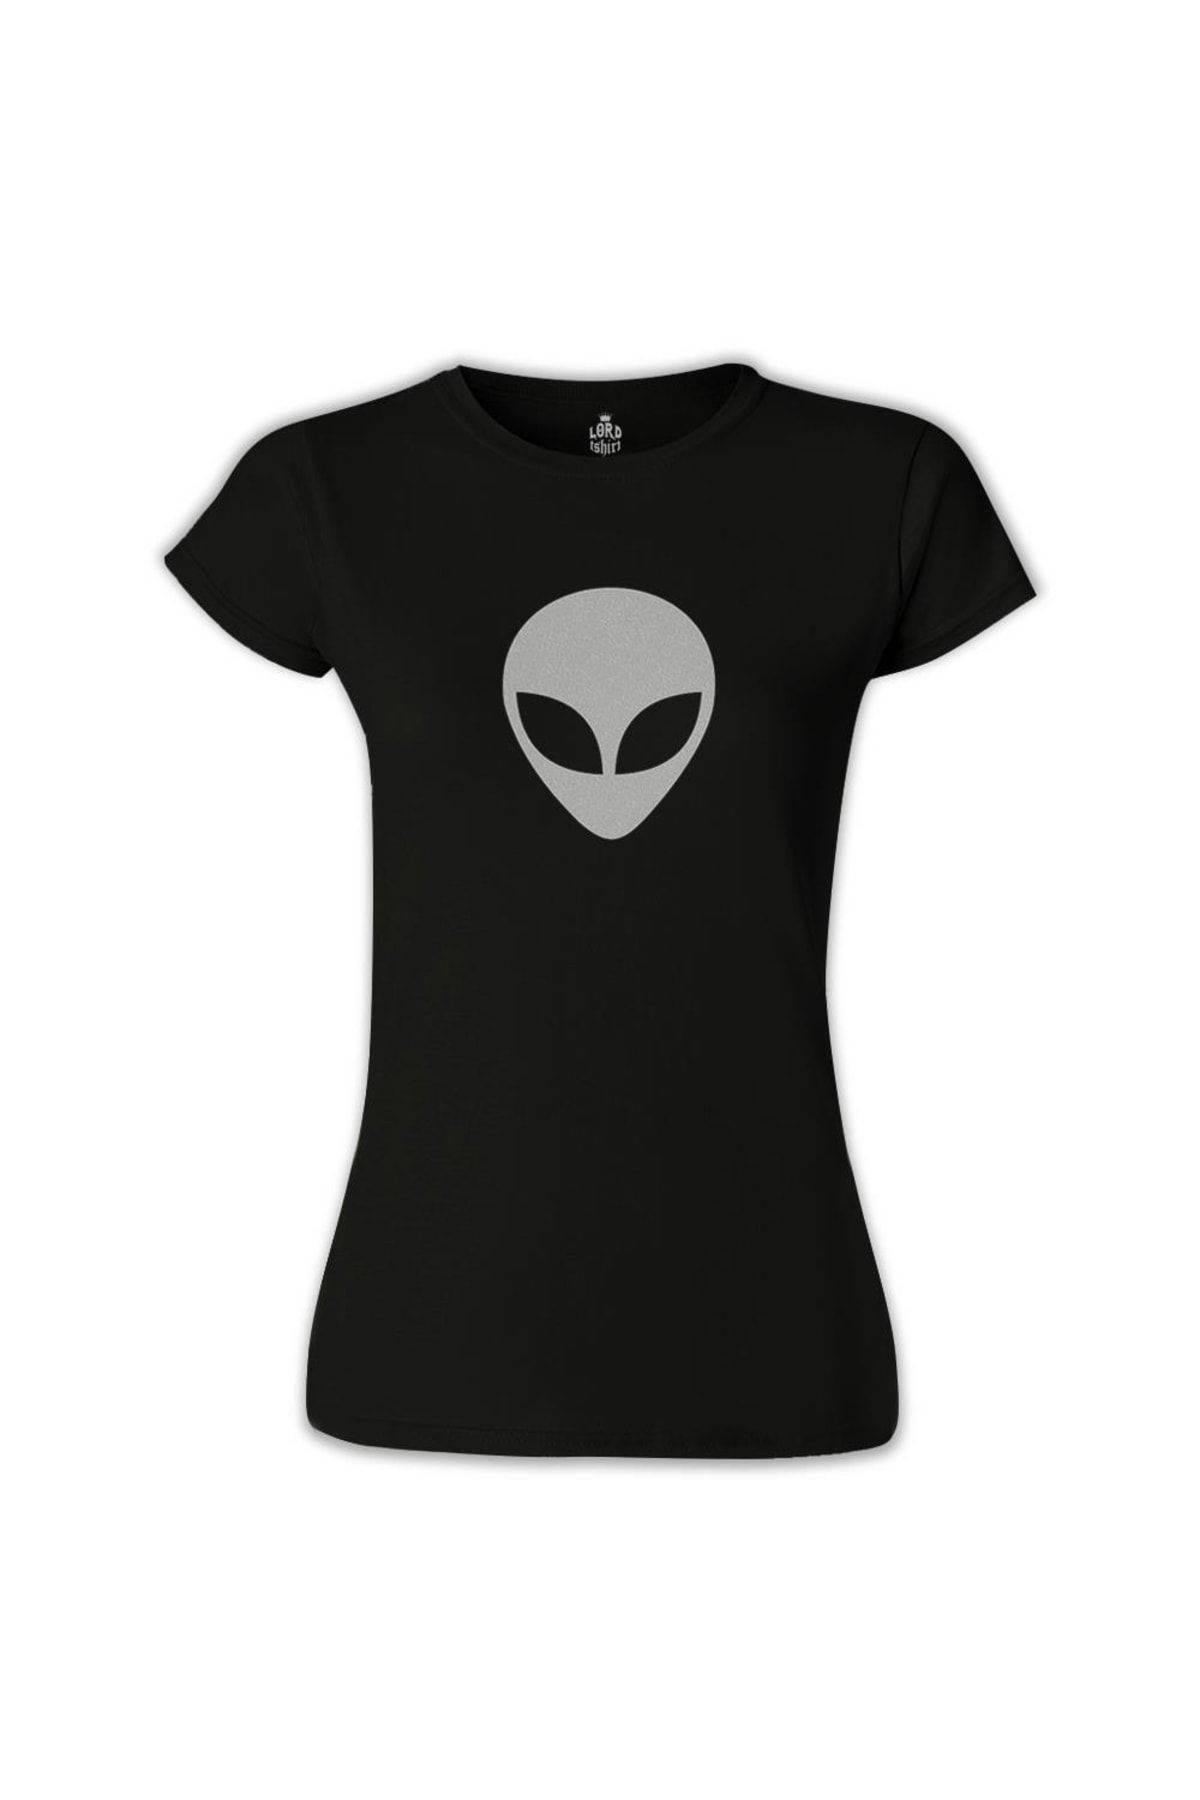 Lord T-Shirt Kadın Siyah Alien Tshirt